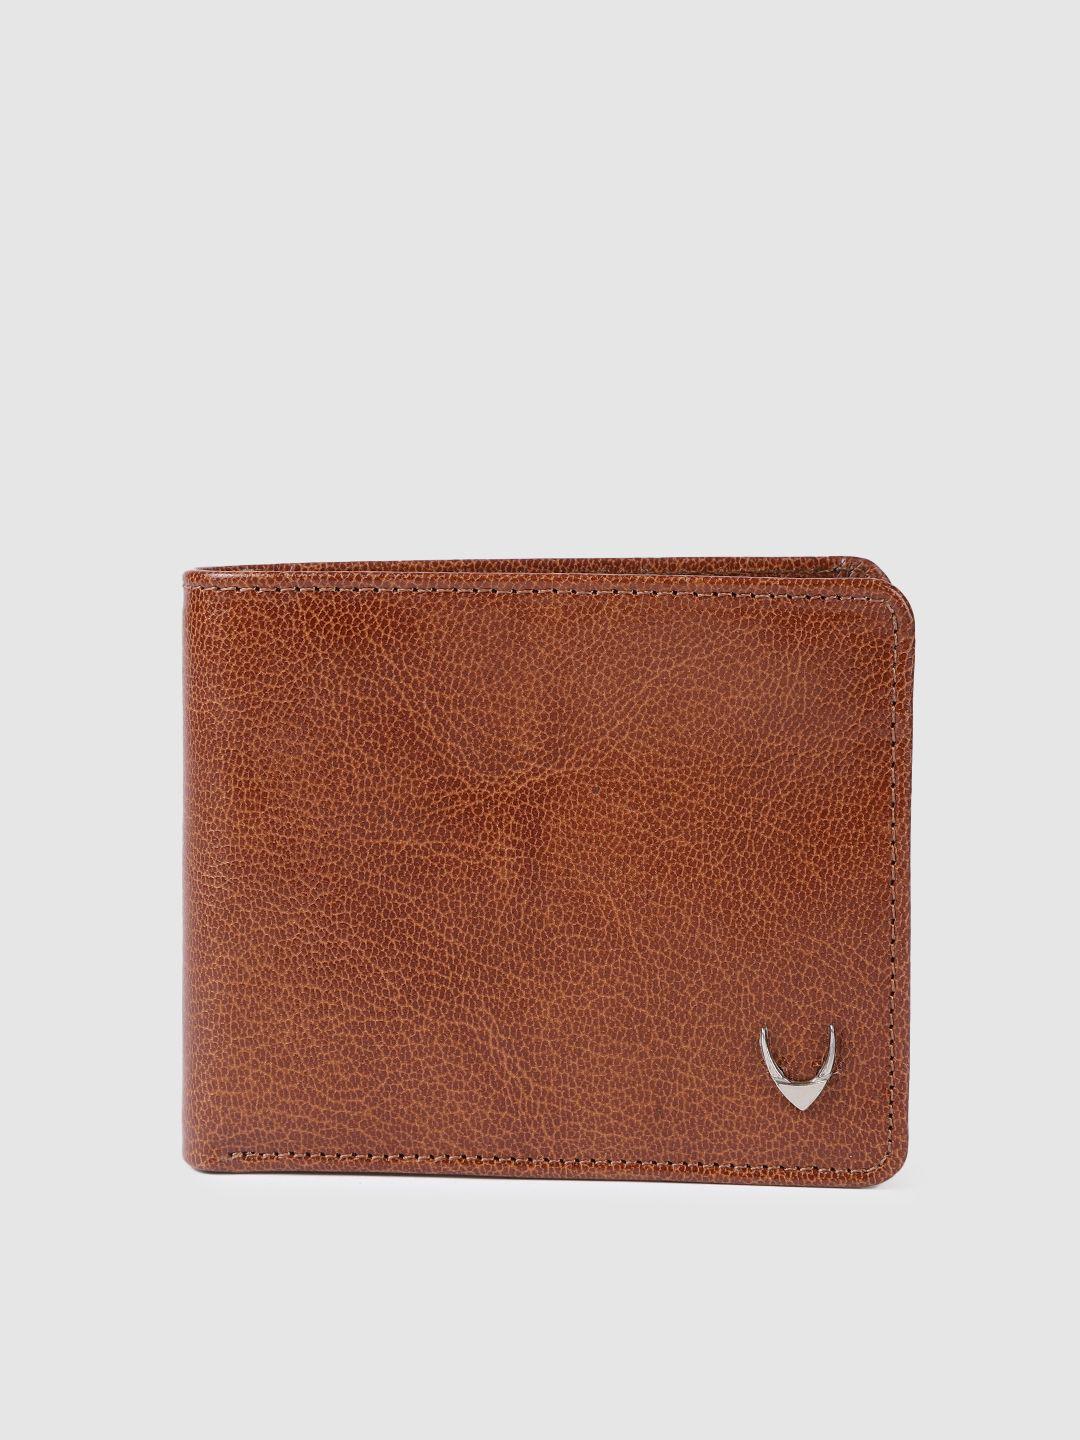 hidesign men tan brown leather two fold wallet